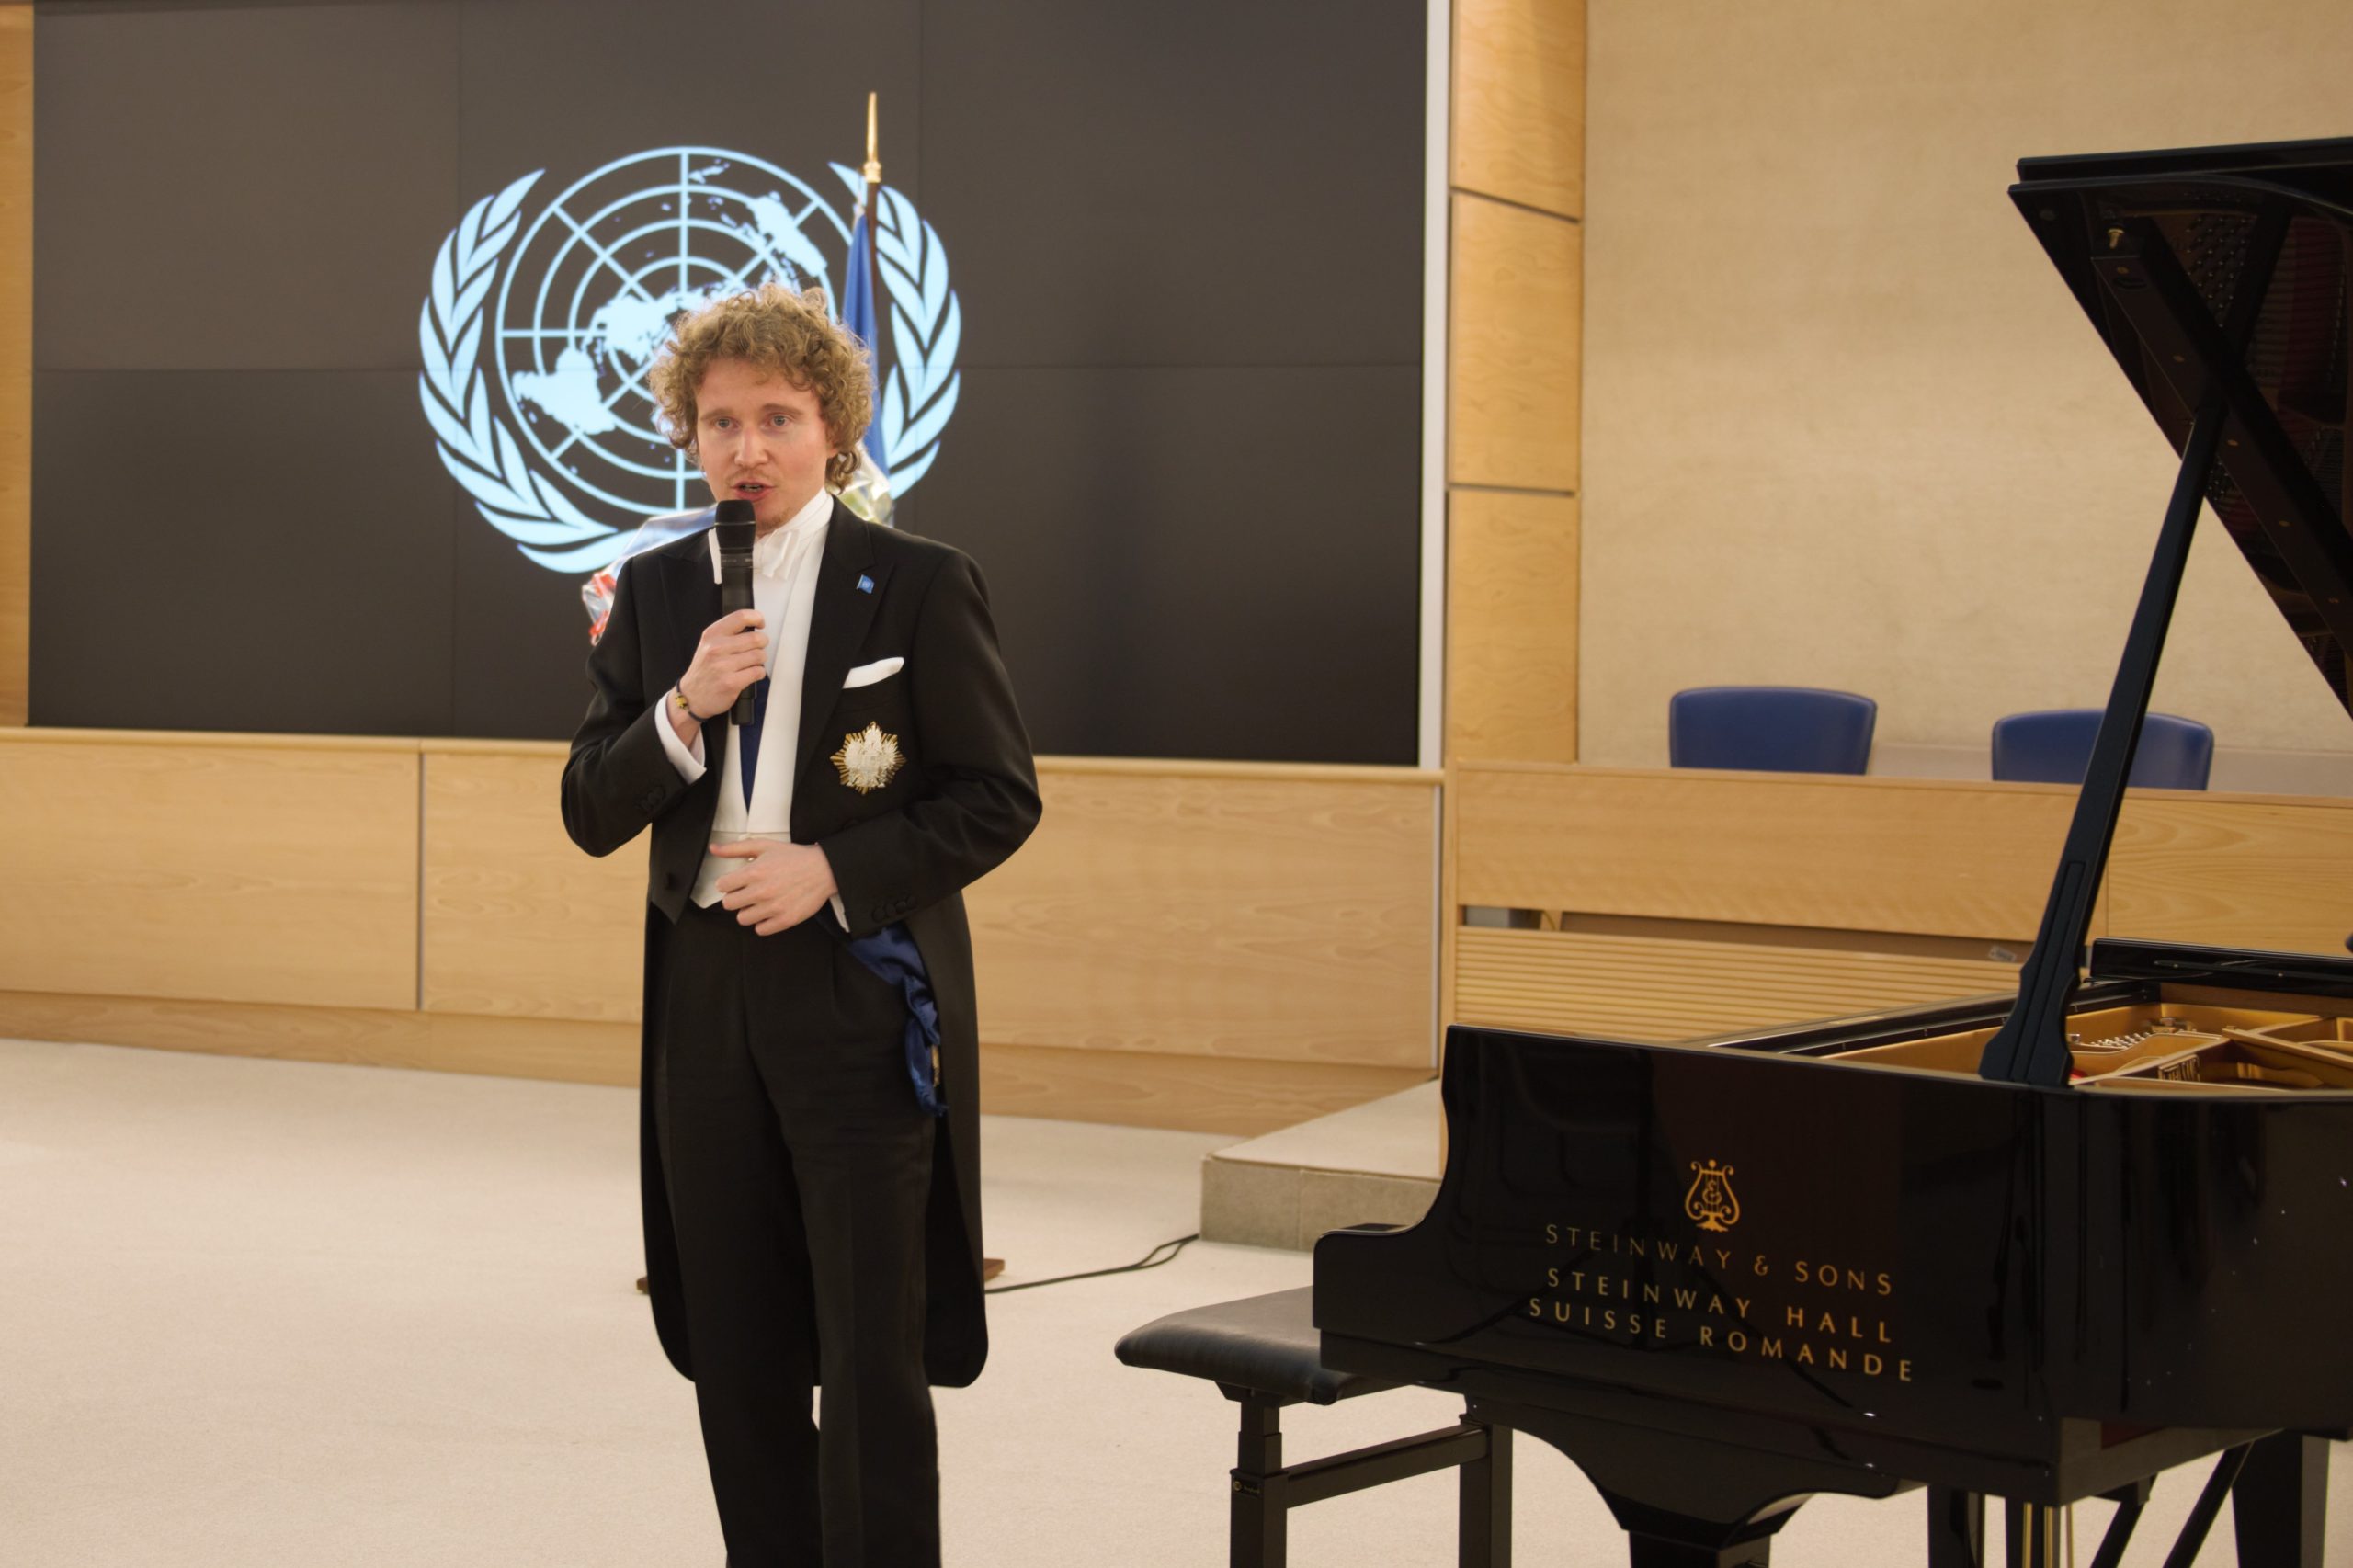 Piano Concert for Peace performed by Nikolay Khozyainov, Palais des Nations, 22nd November 2022